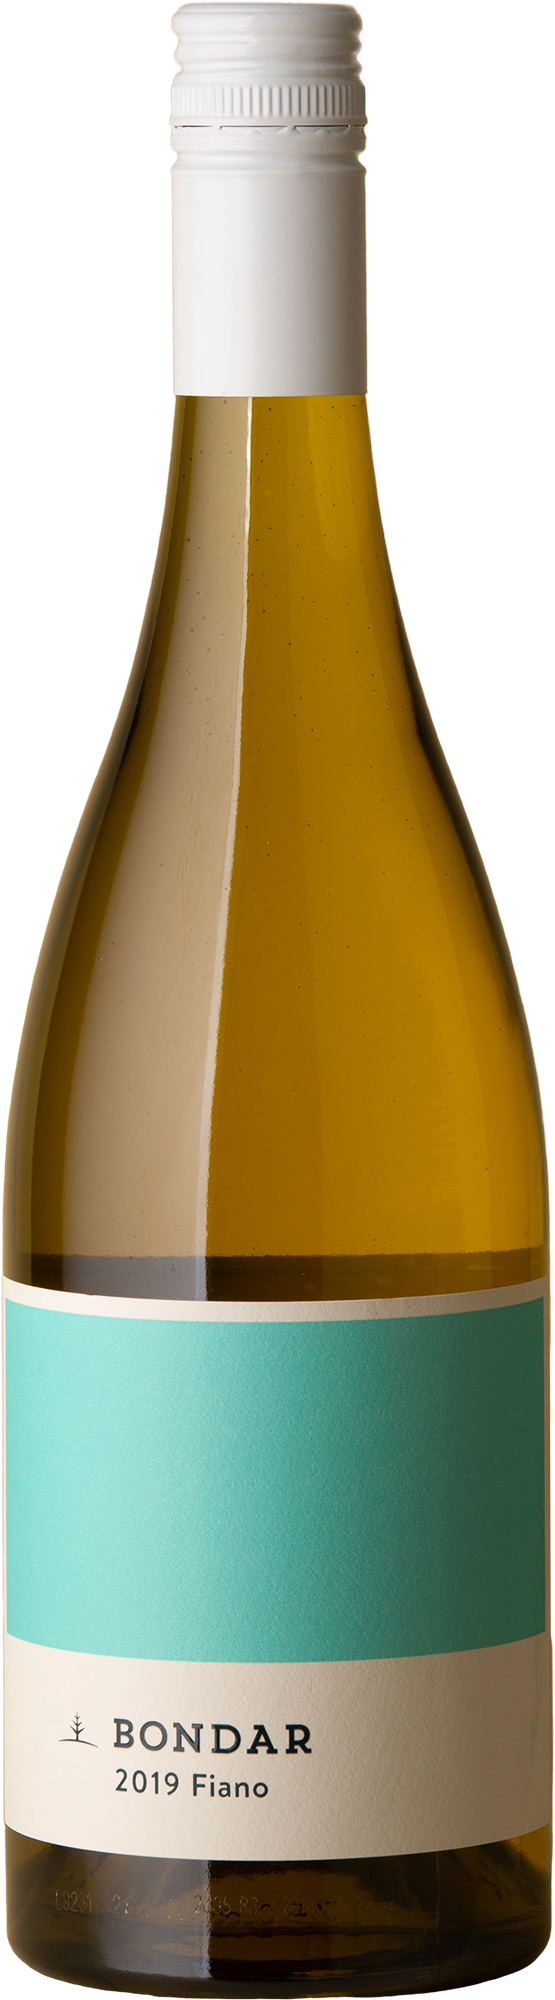 Bondar - Fiano 2019 White Wine